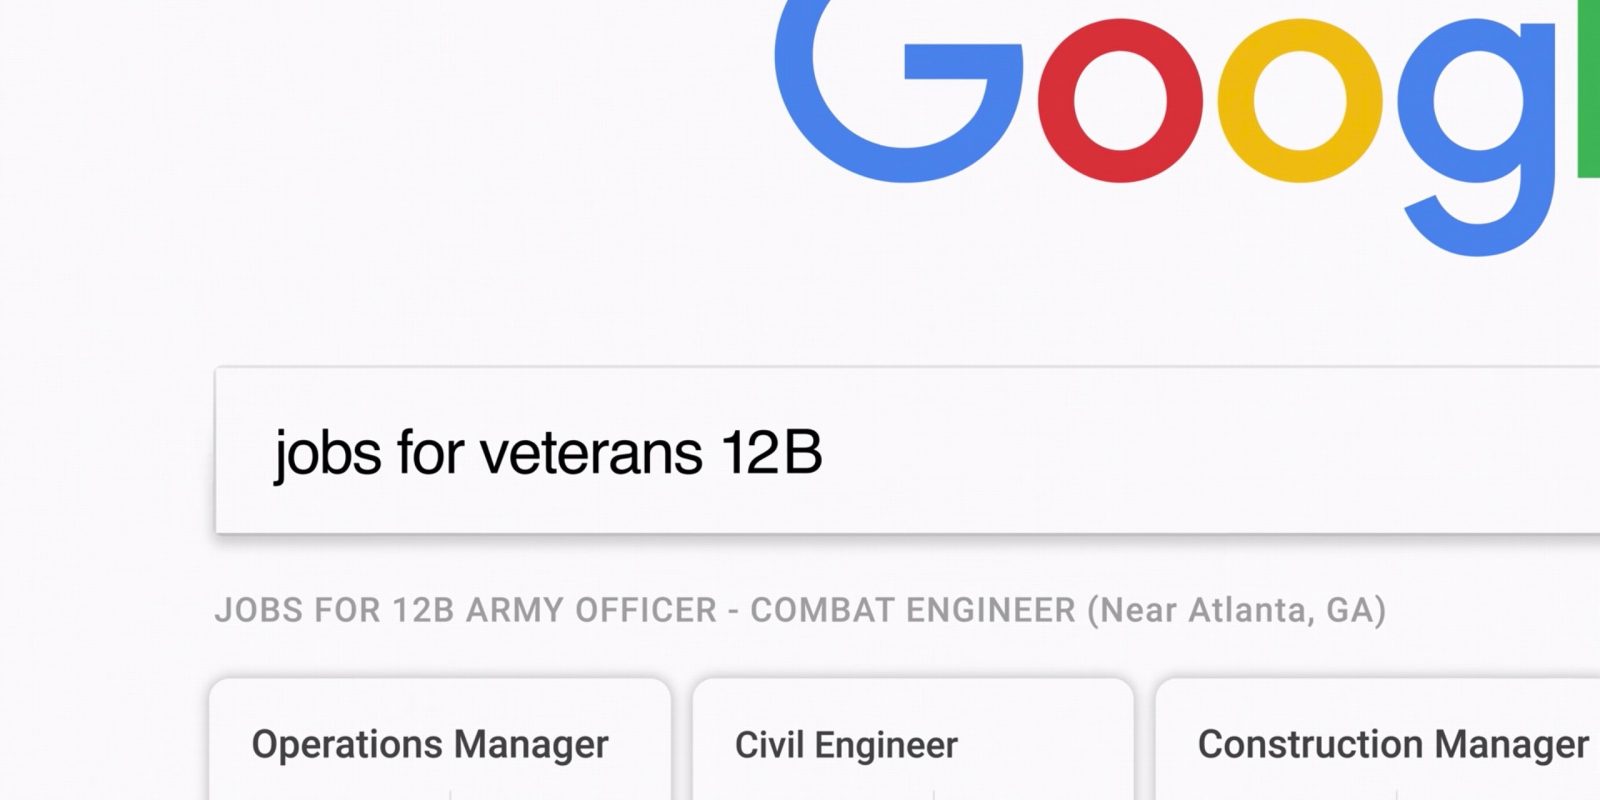 Google Job Search for Veterans Super Bowl